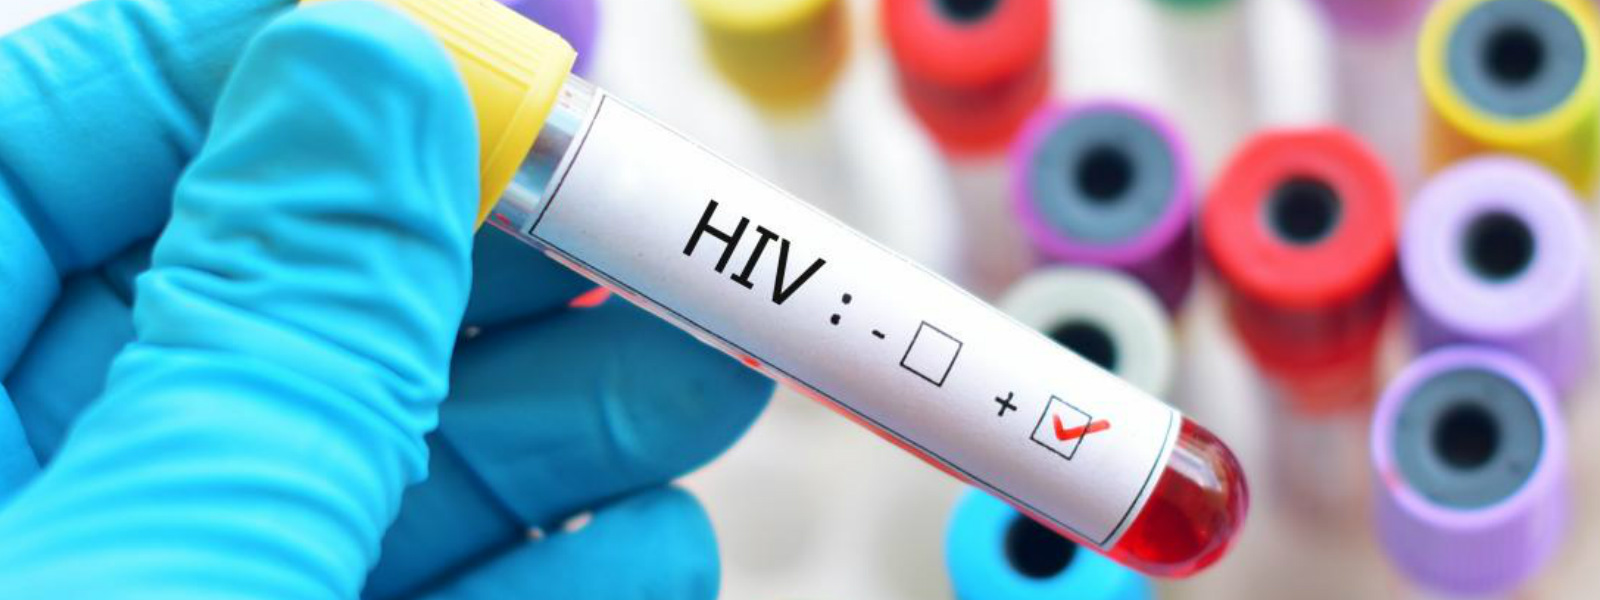 HIV ආසාදිතයින් හඳුනා ගැනීමේ පරීක්ෂණ යළිත්